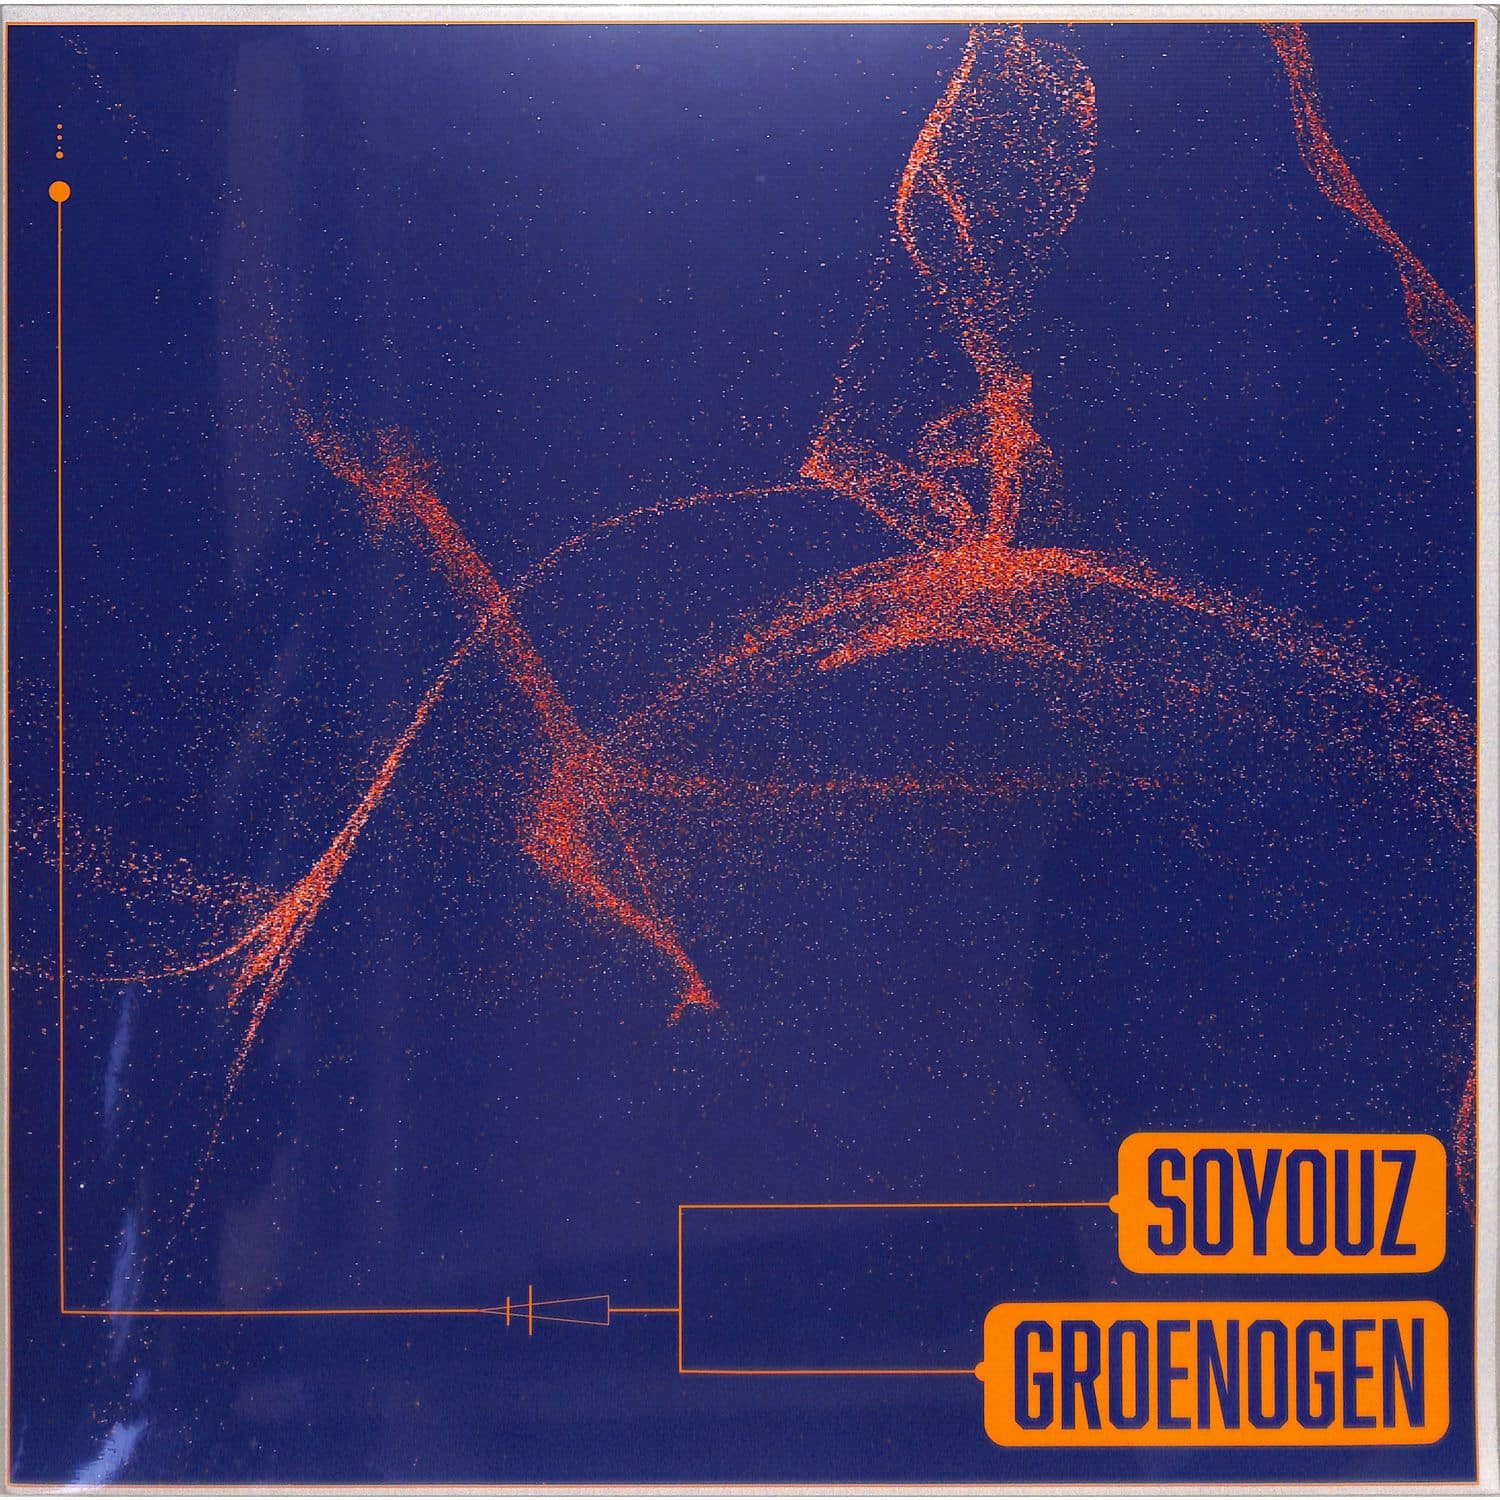 Soyouz, Groenogen - THE LED PROCESS